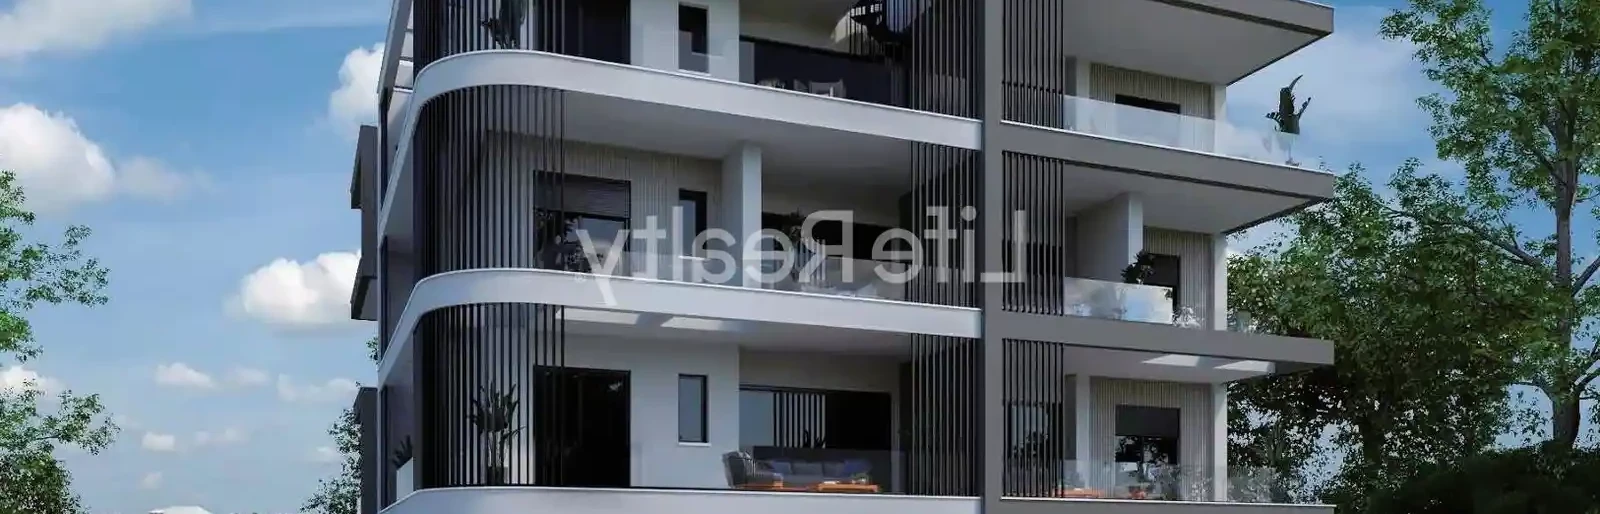 2-bedroom penthouse fоr sаle €525.000, image 1